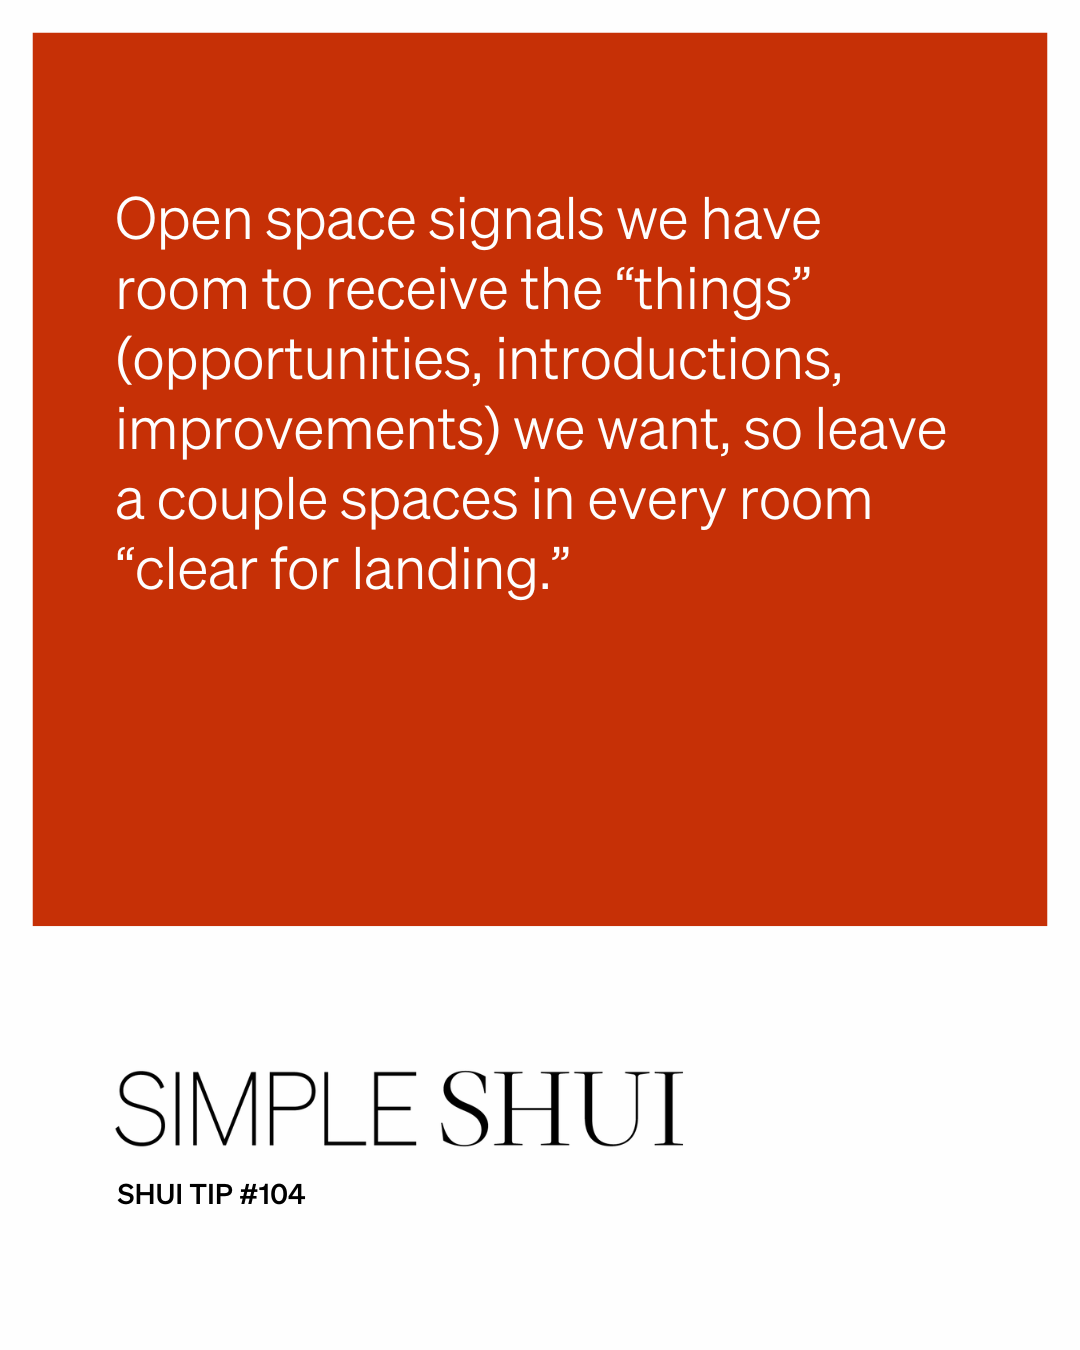 simple shui tip: open up!